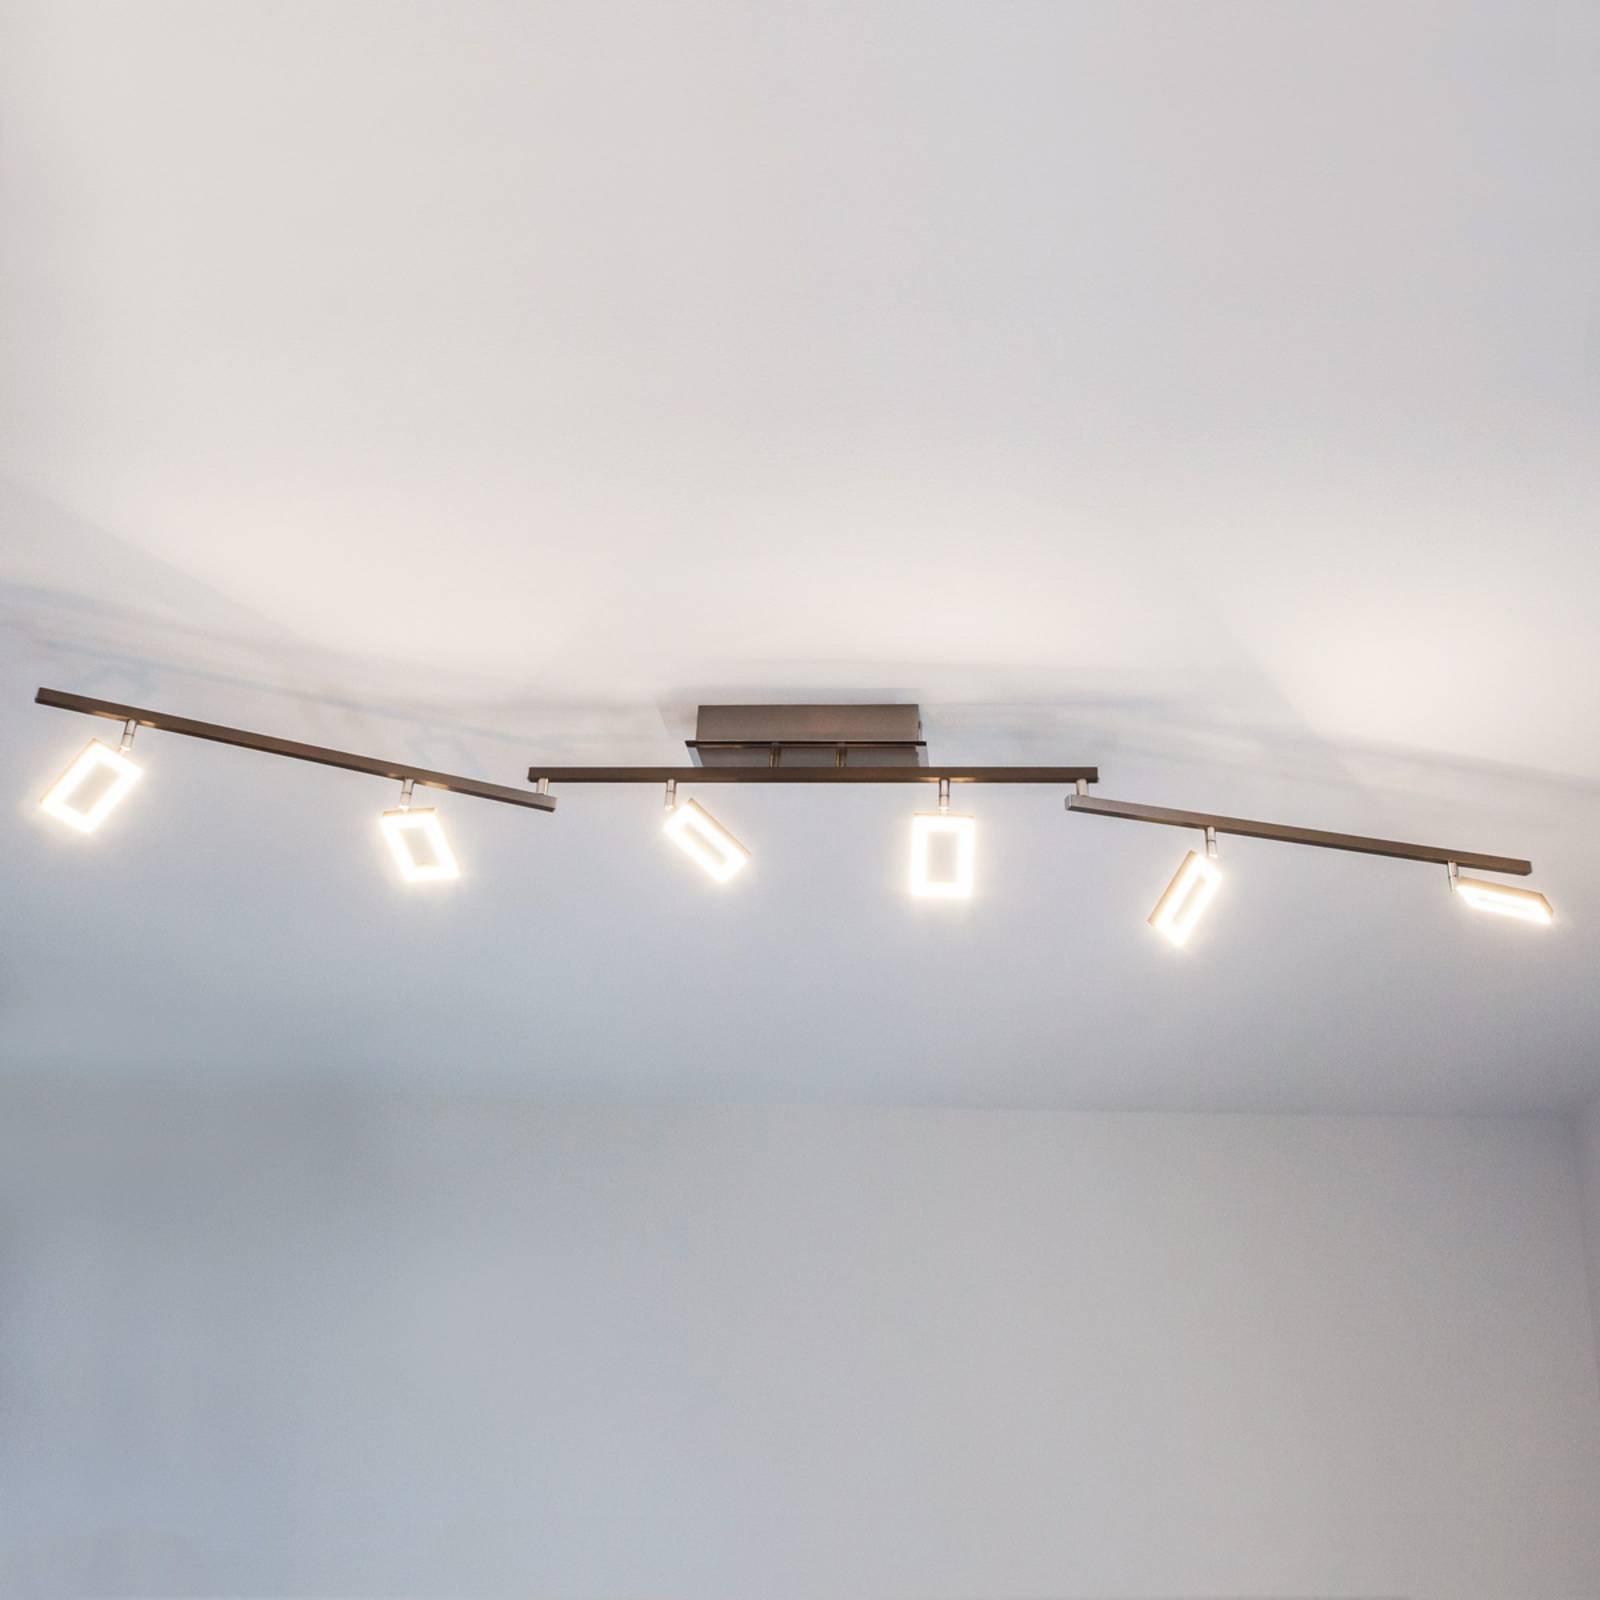 LED plafondlamp Inigo met zes lichtbronnen